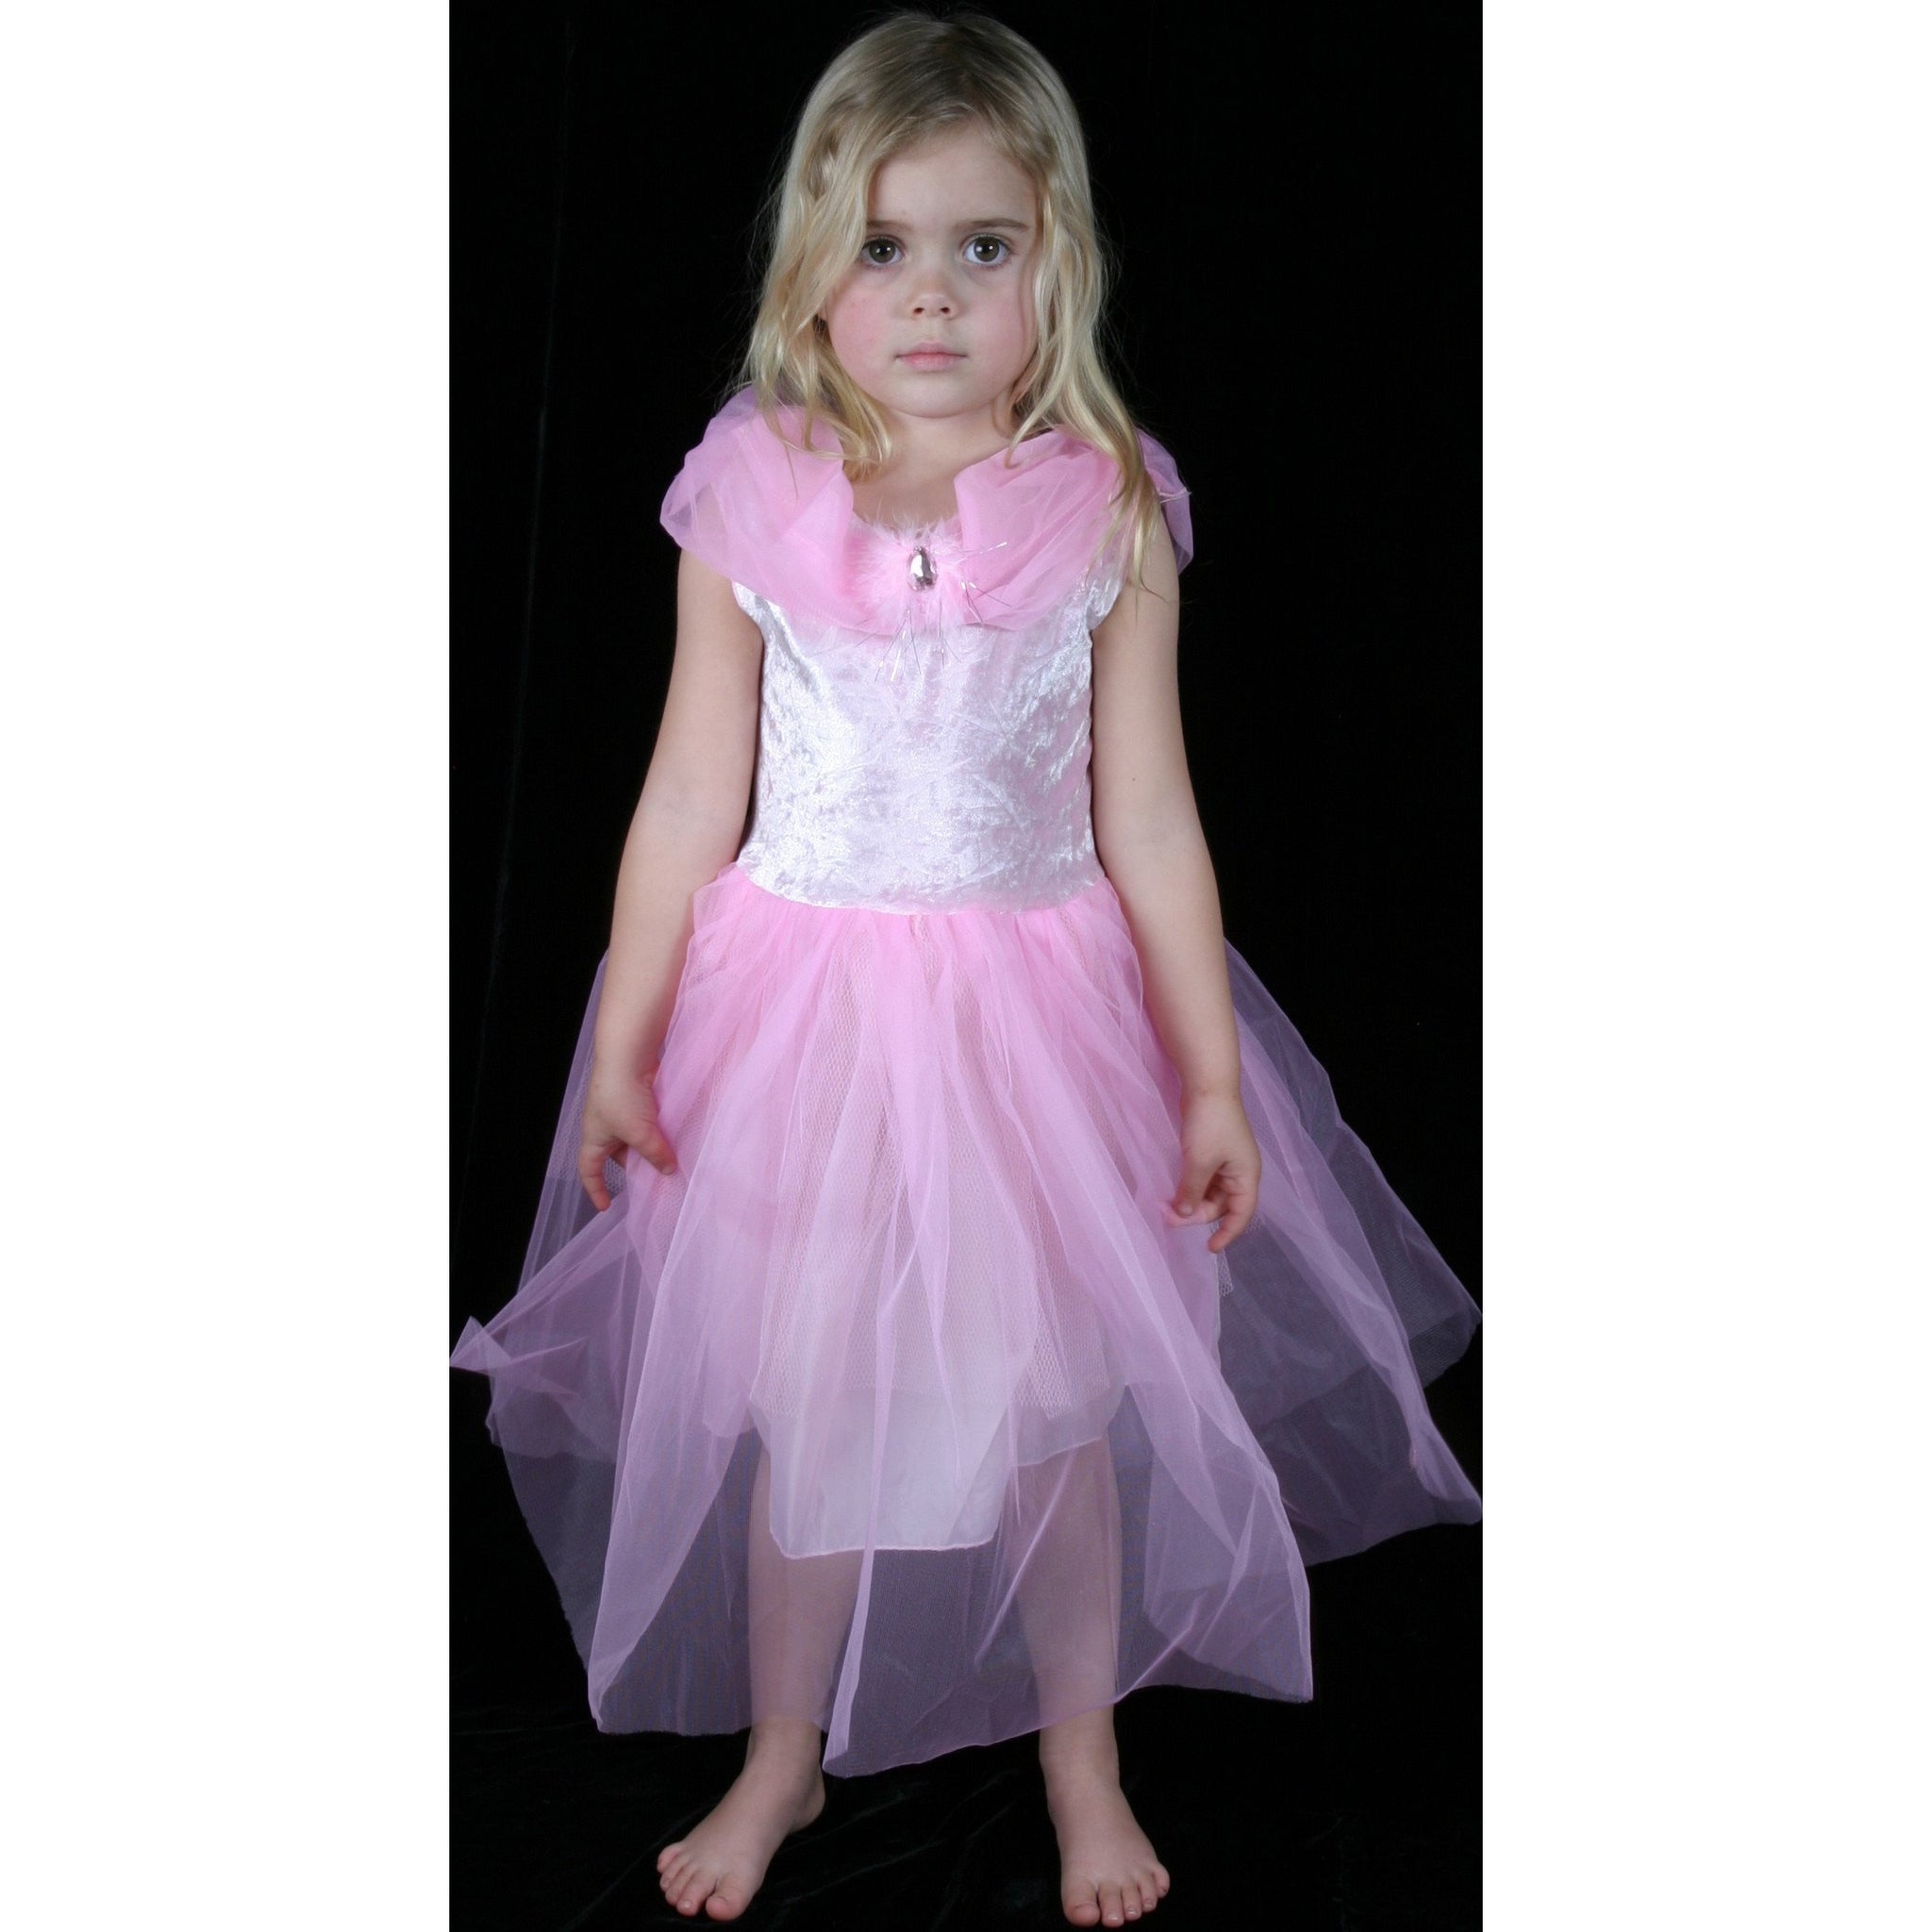 Soft Pink Stretch Velvet Dress opera ballet gown frock flower girl